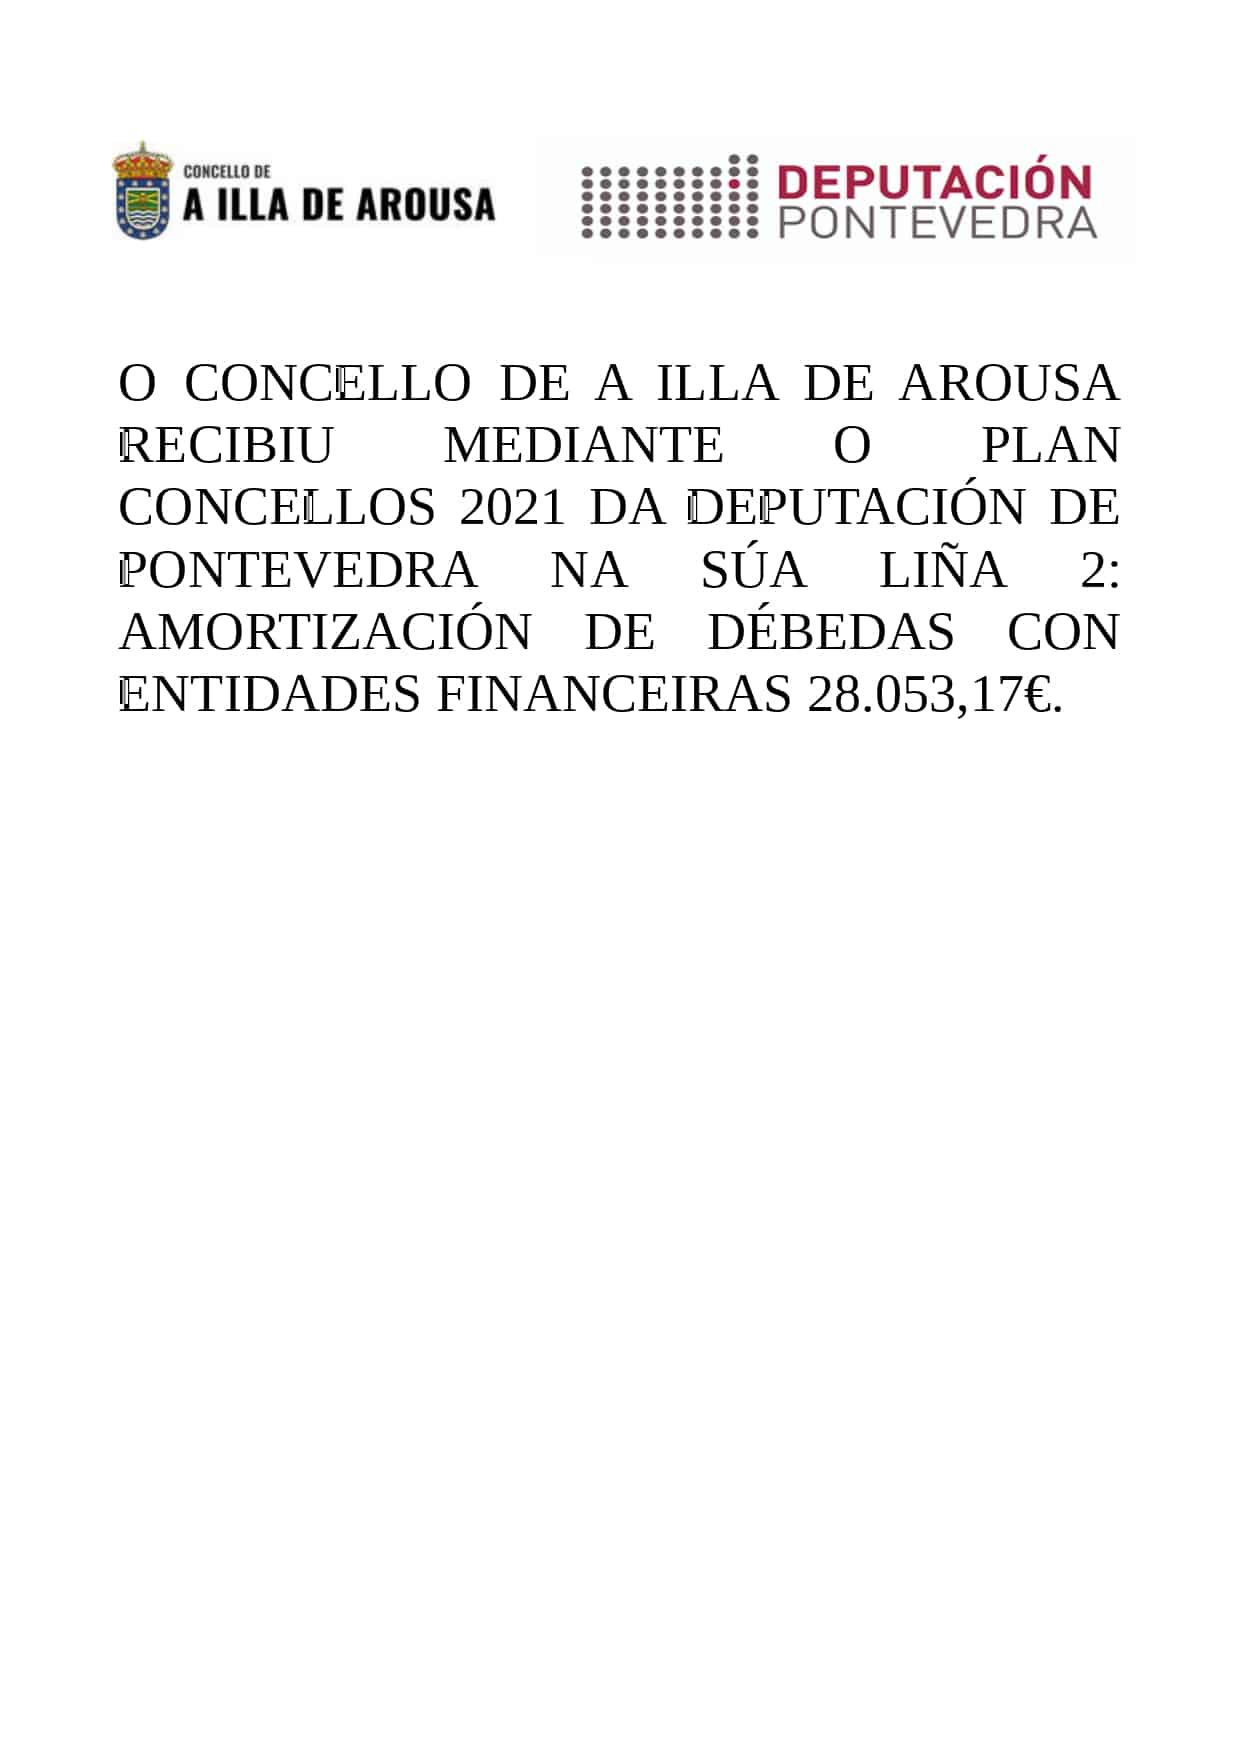 La isla de Arousa |  PLAN DE INFORMACIÓN CONCELLOS 2021 DEPUTACIÓN DE PONTEVEDRA